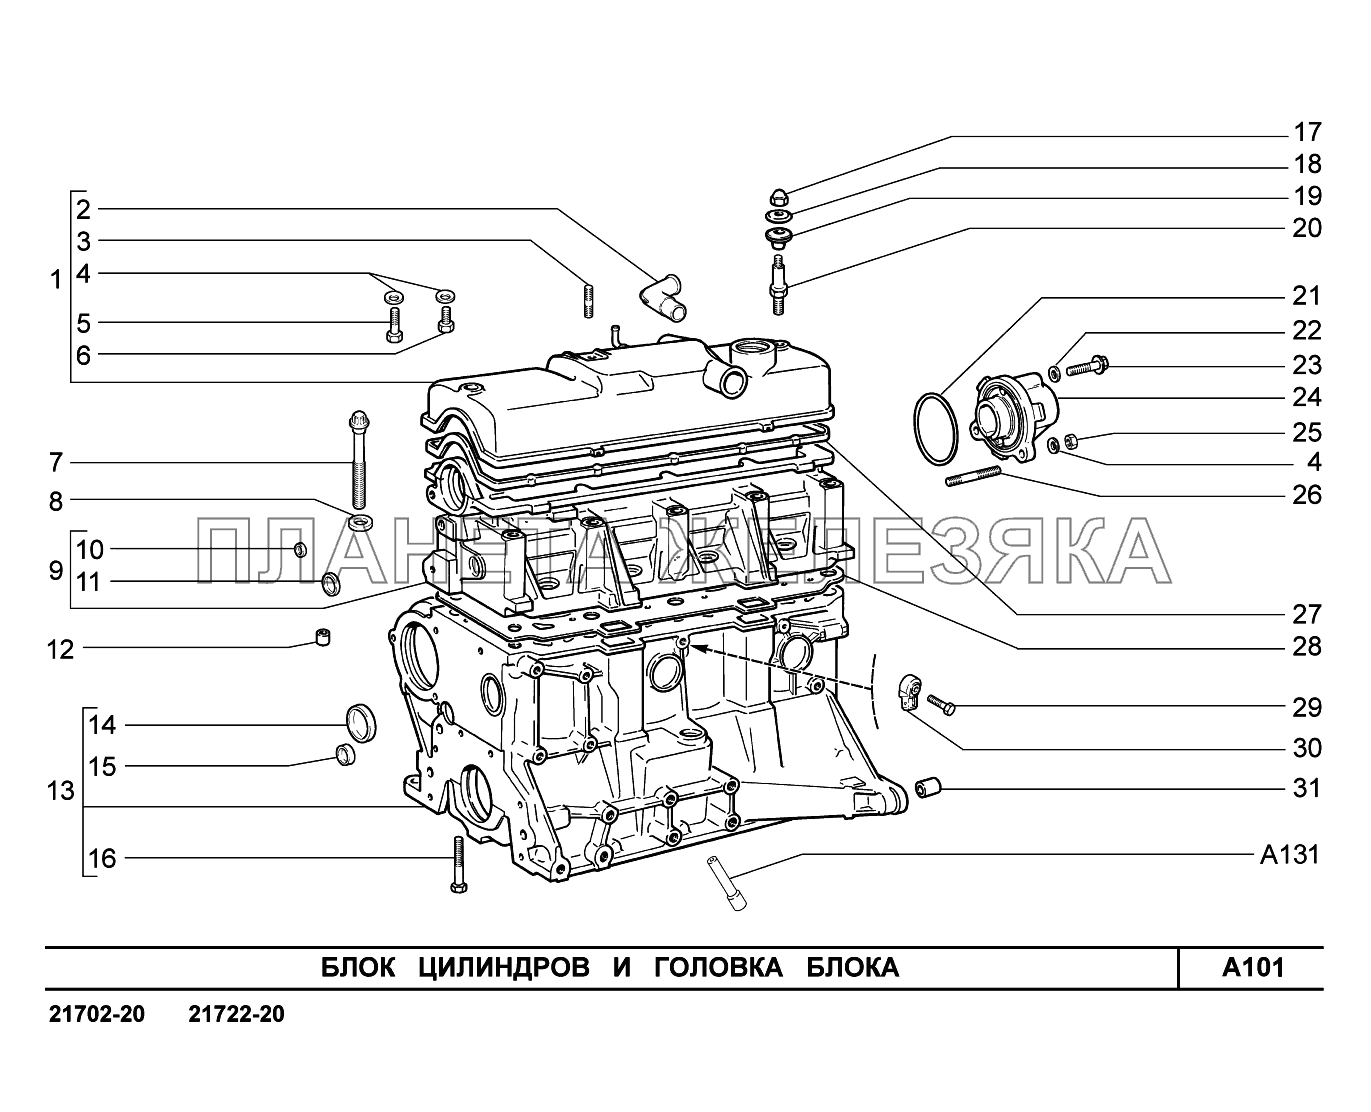 A101. Блок цилиндров и головка блока ВАЗ-2170 